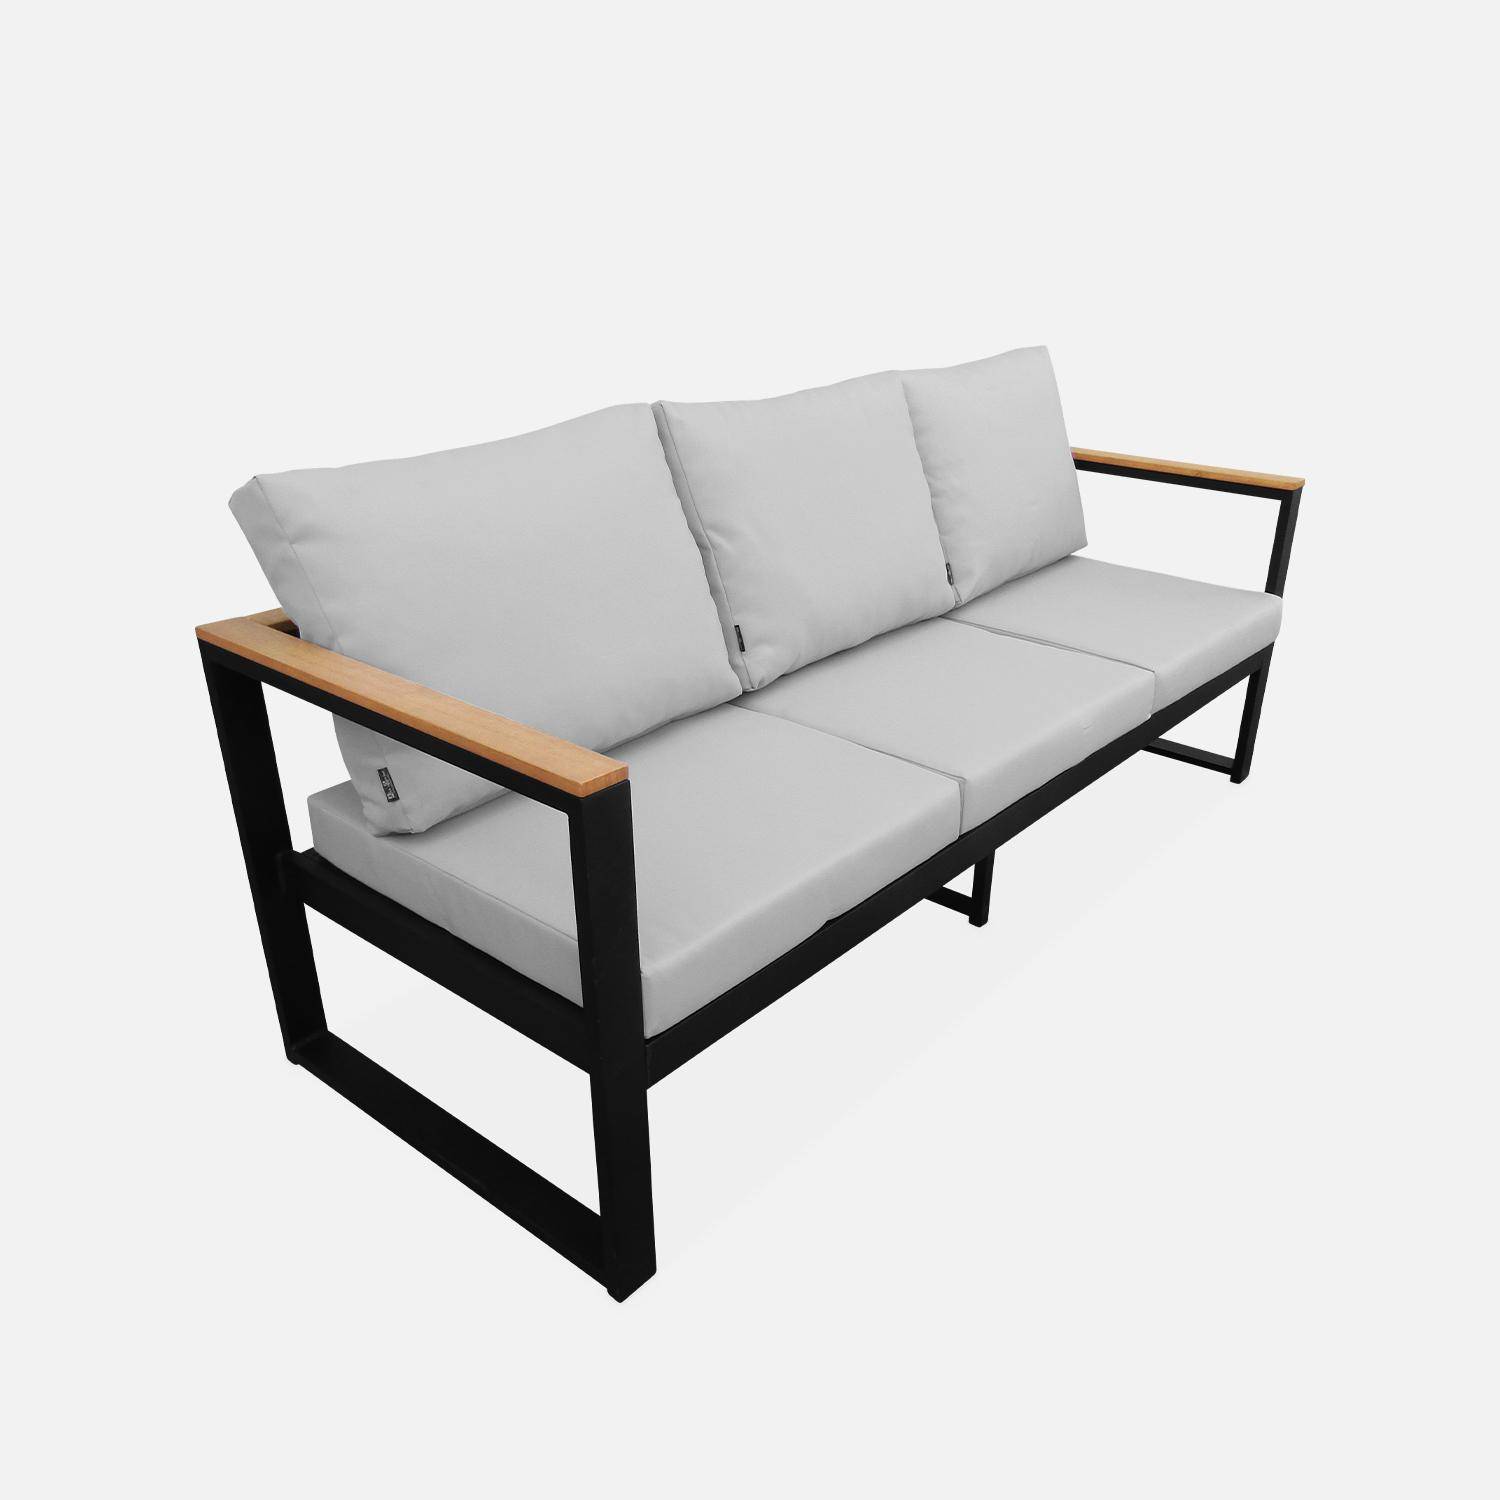 5-seater aluminium and wood garden lounge set, black & grey Photo5